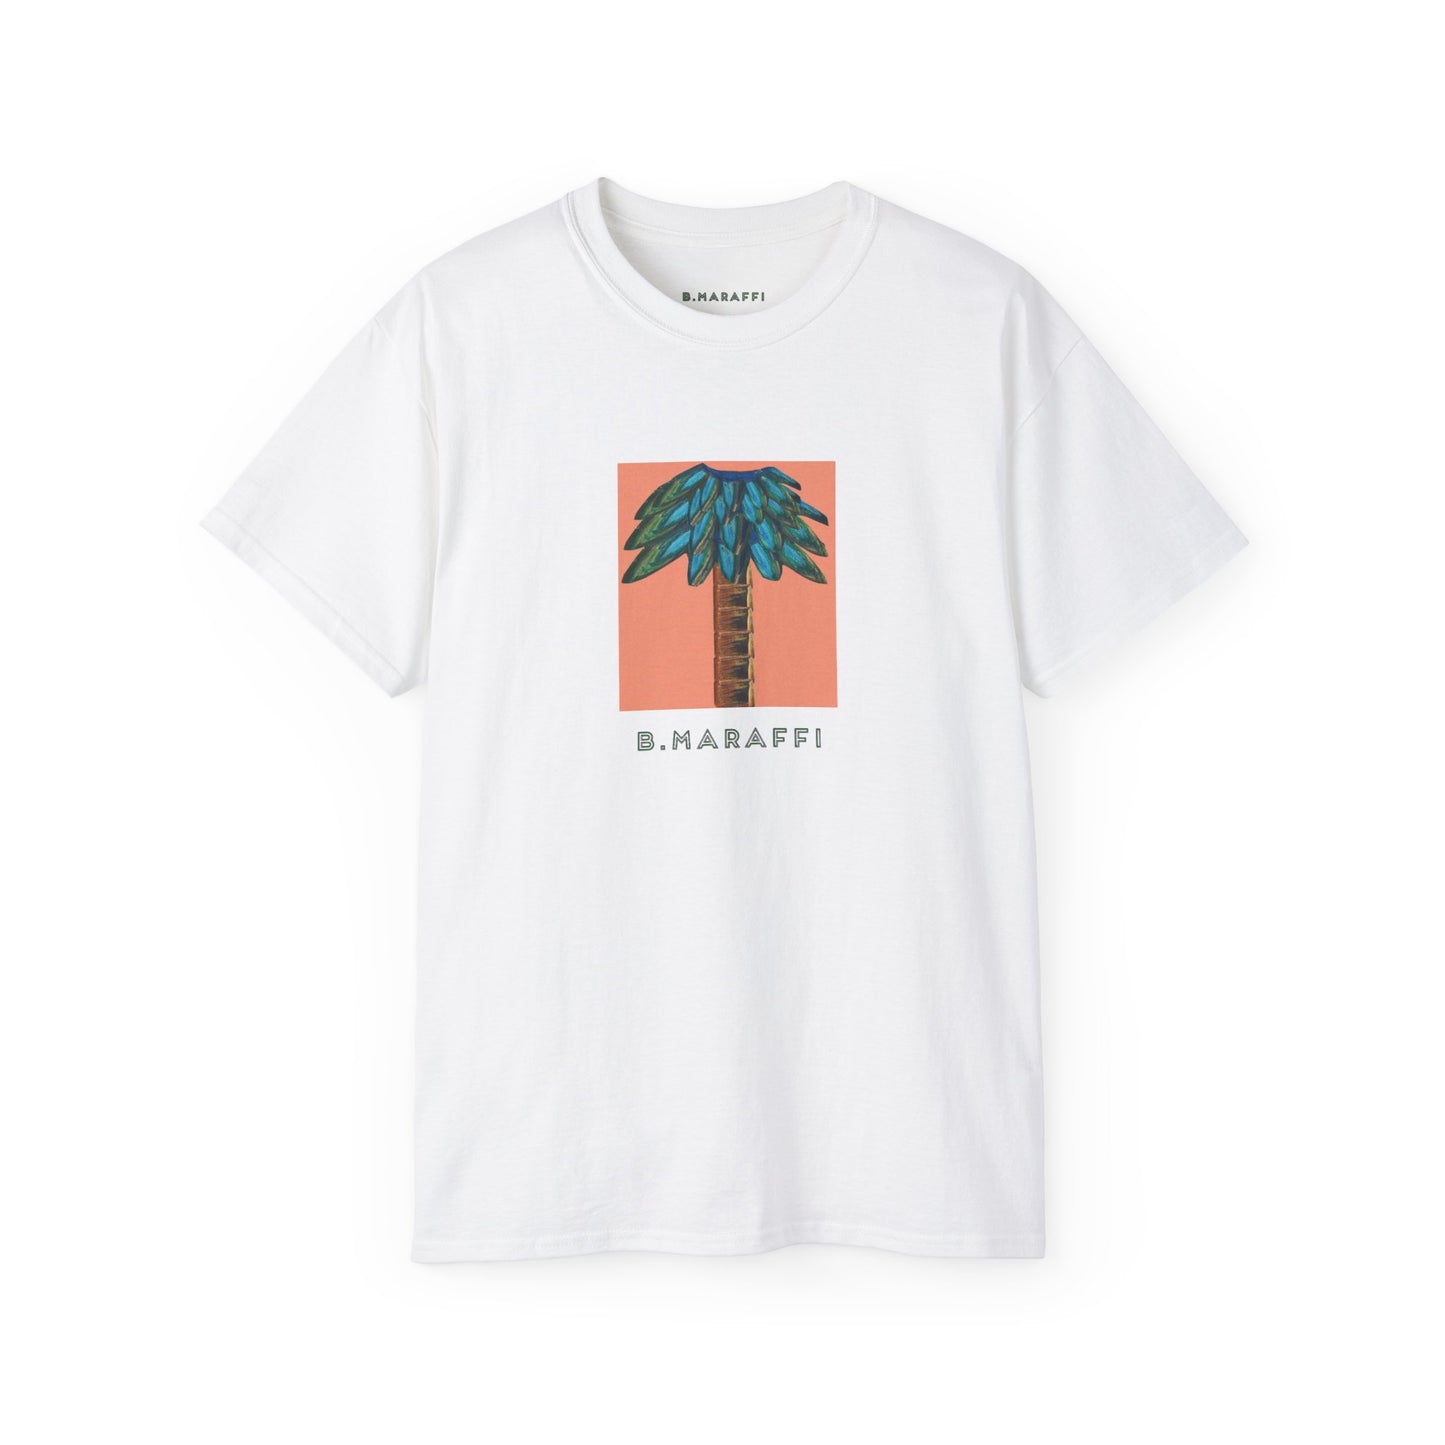 B.Maraffi Cotton T-shirt - Tiki Palm Sherbet